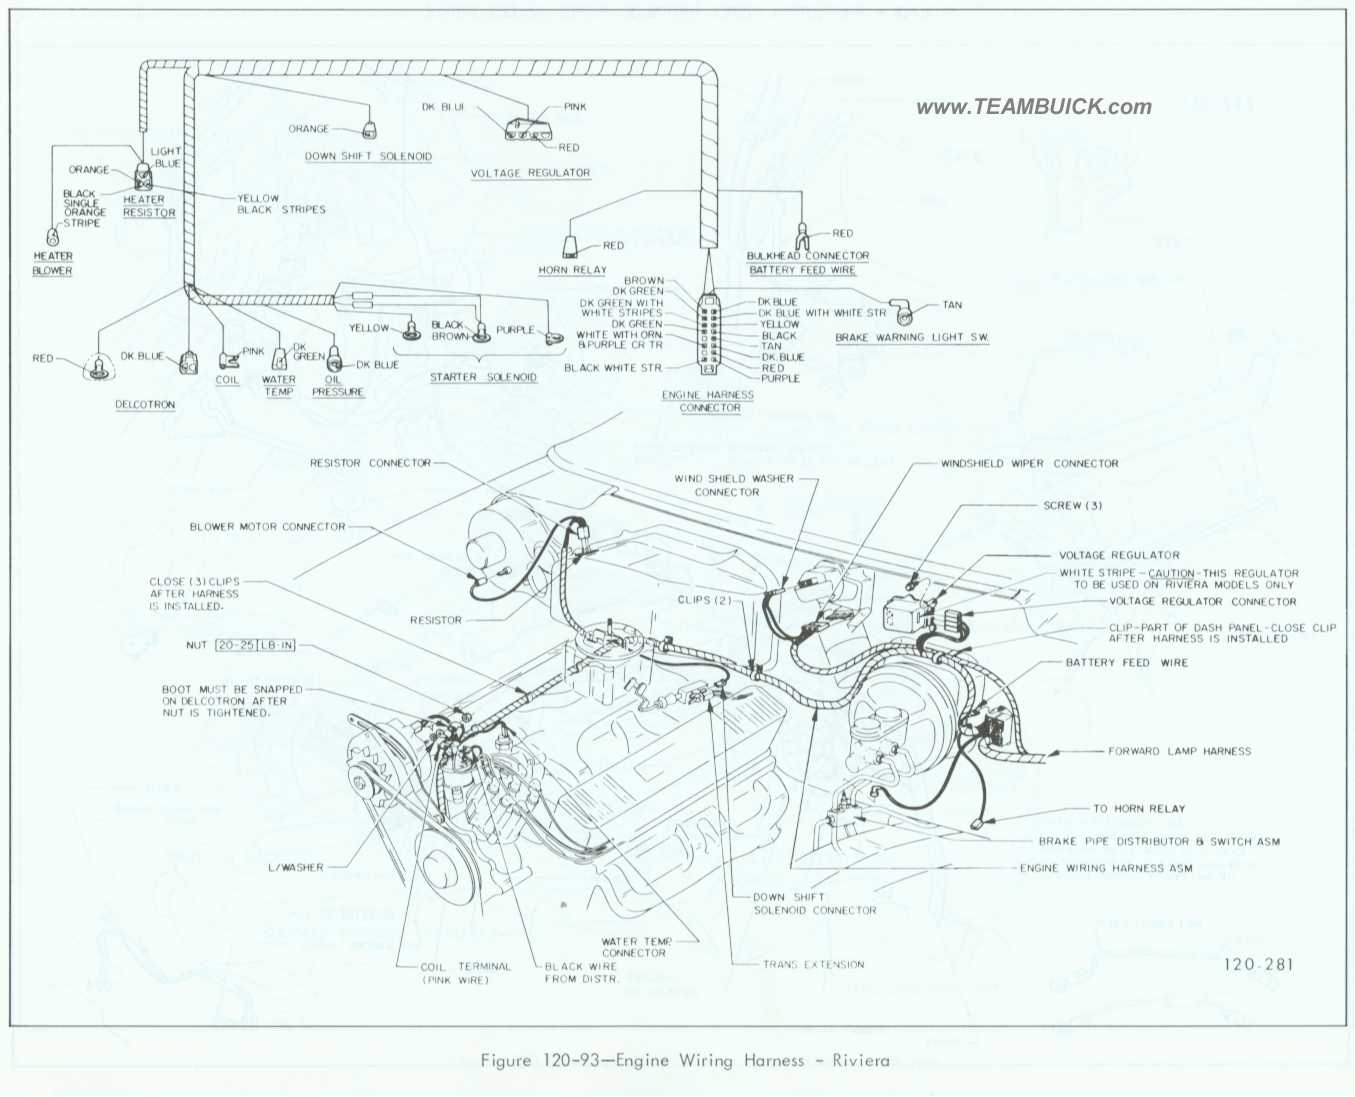 1967 Buick Riviera, Engine Wiring Harness